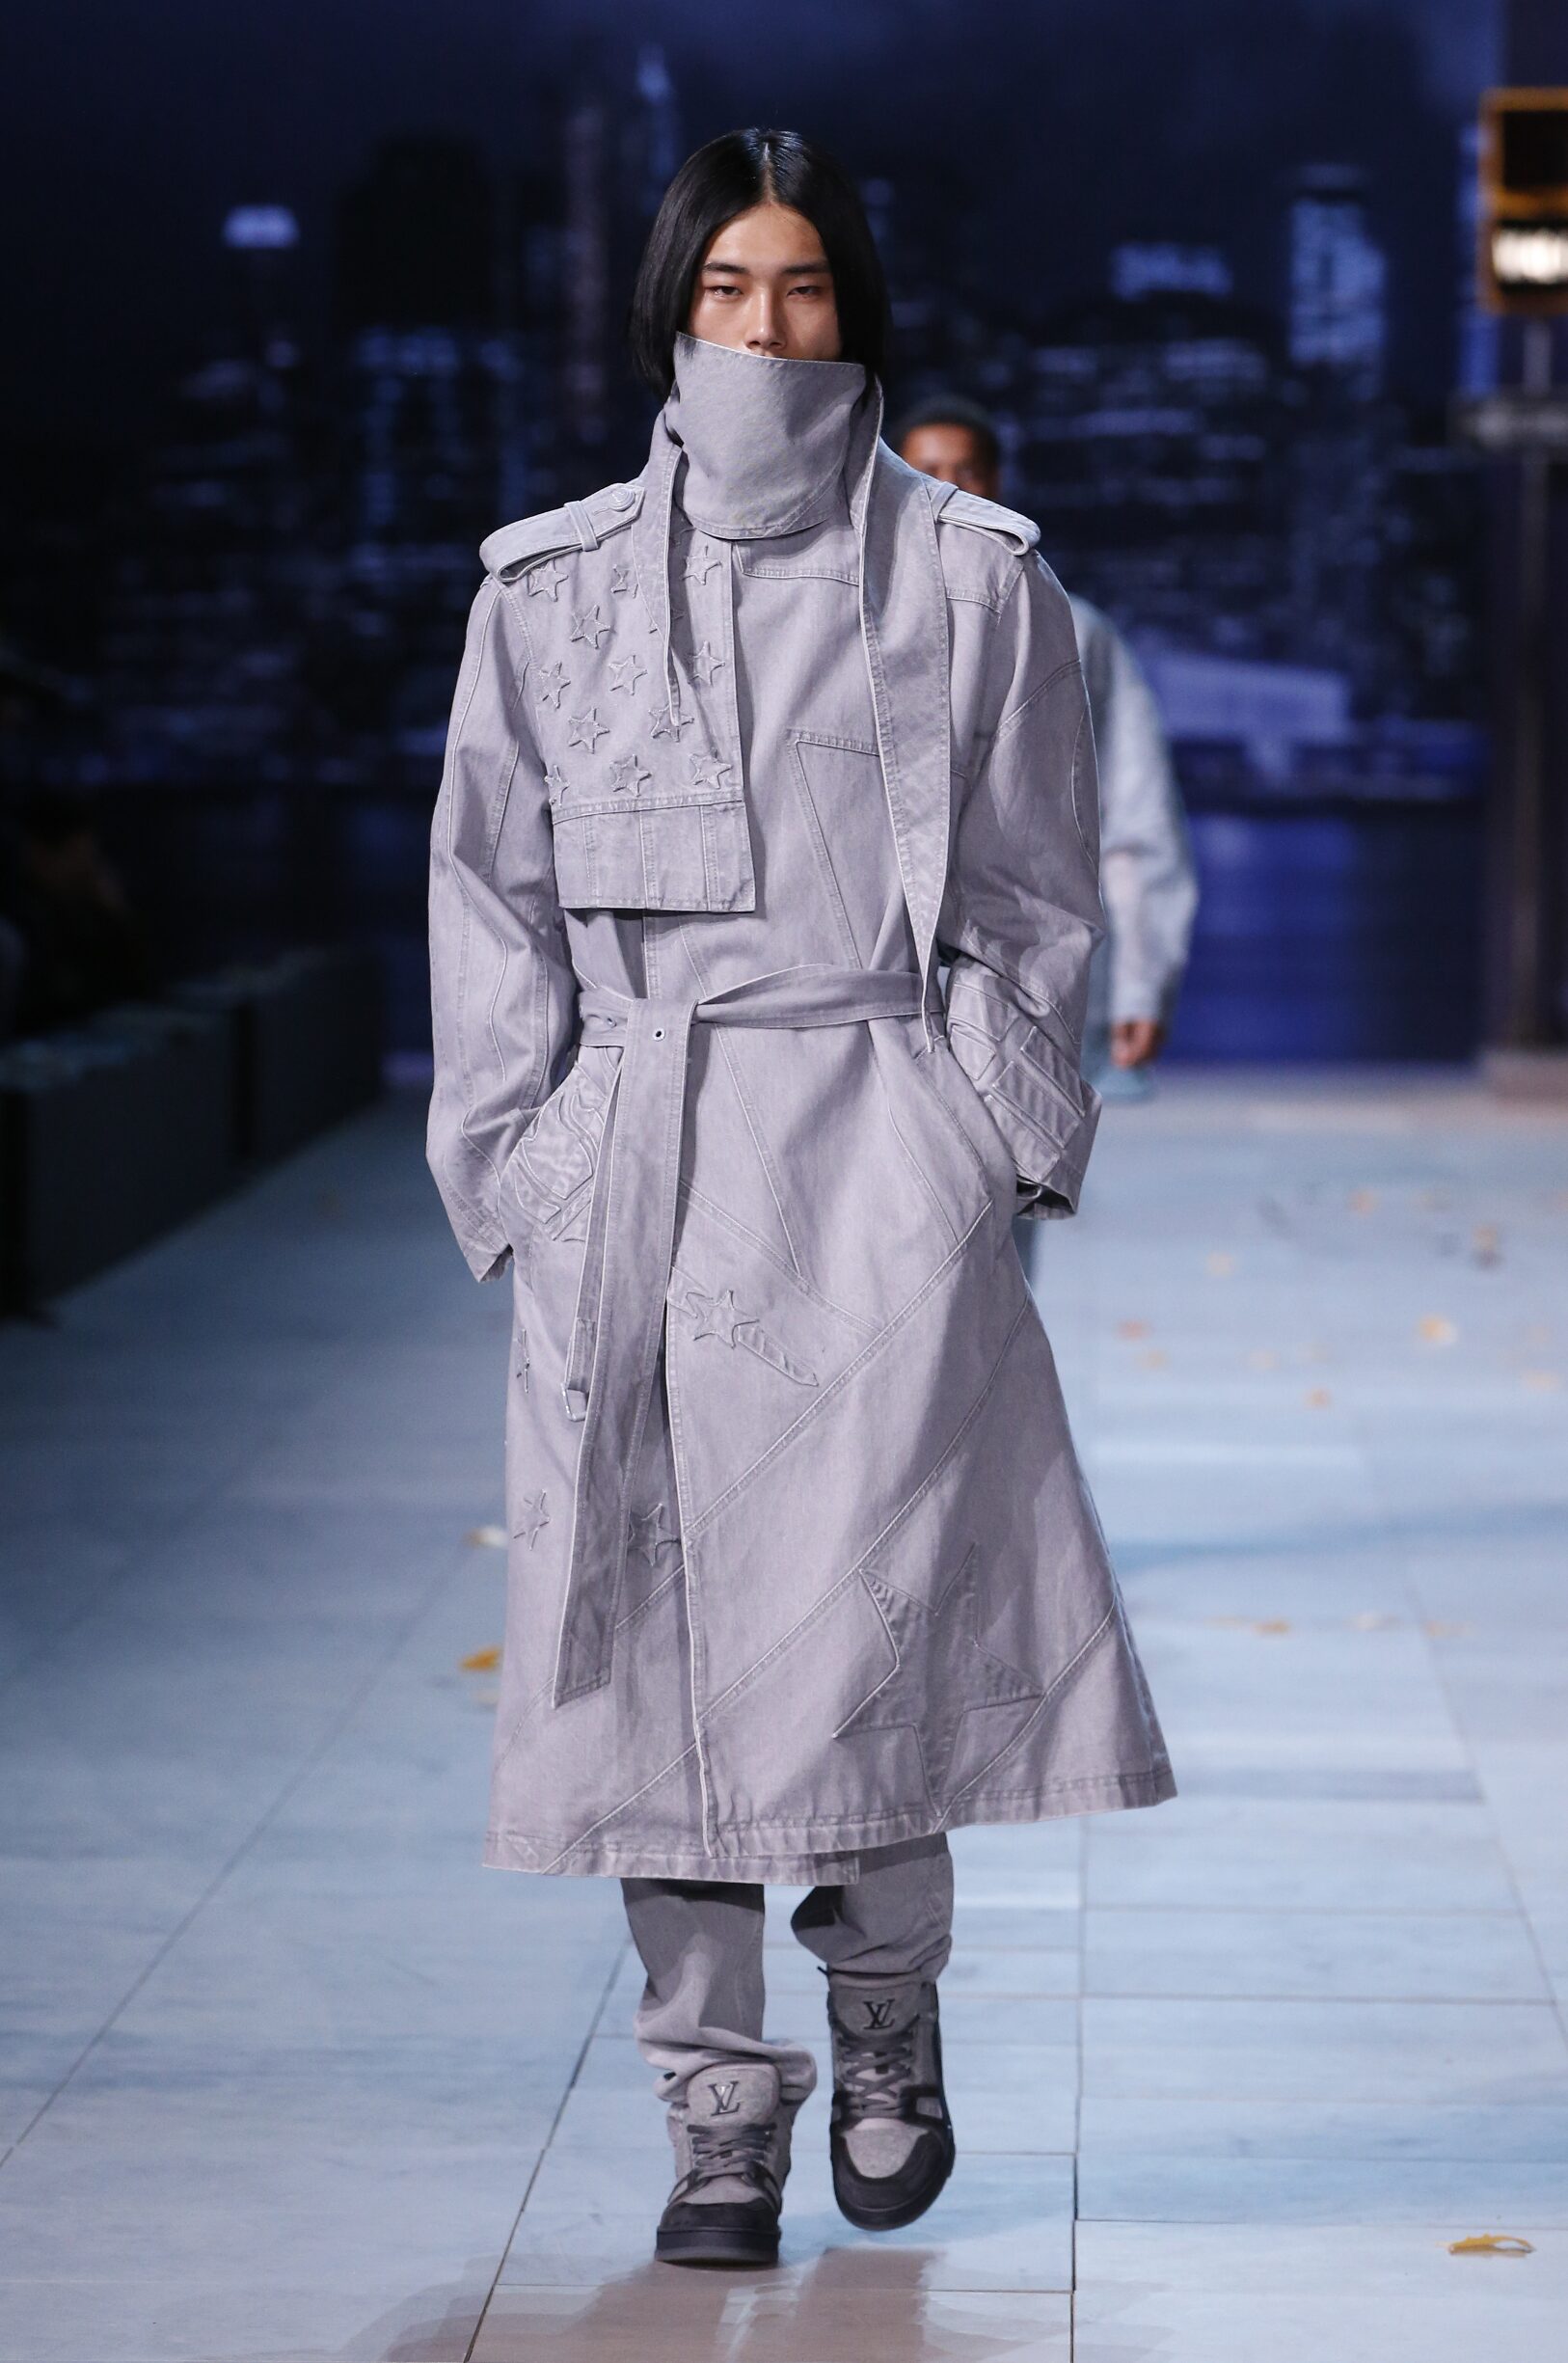 An Up-Close Look At Louis Vuitton's Fall/Winter 2019 Menswear